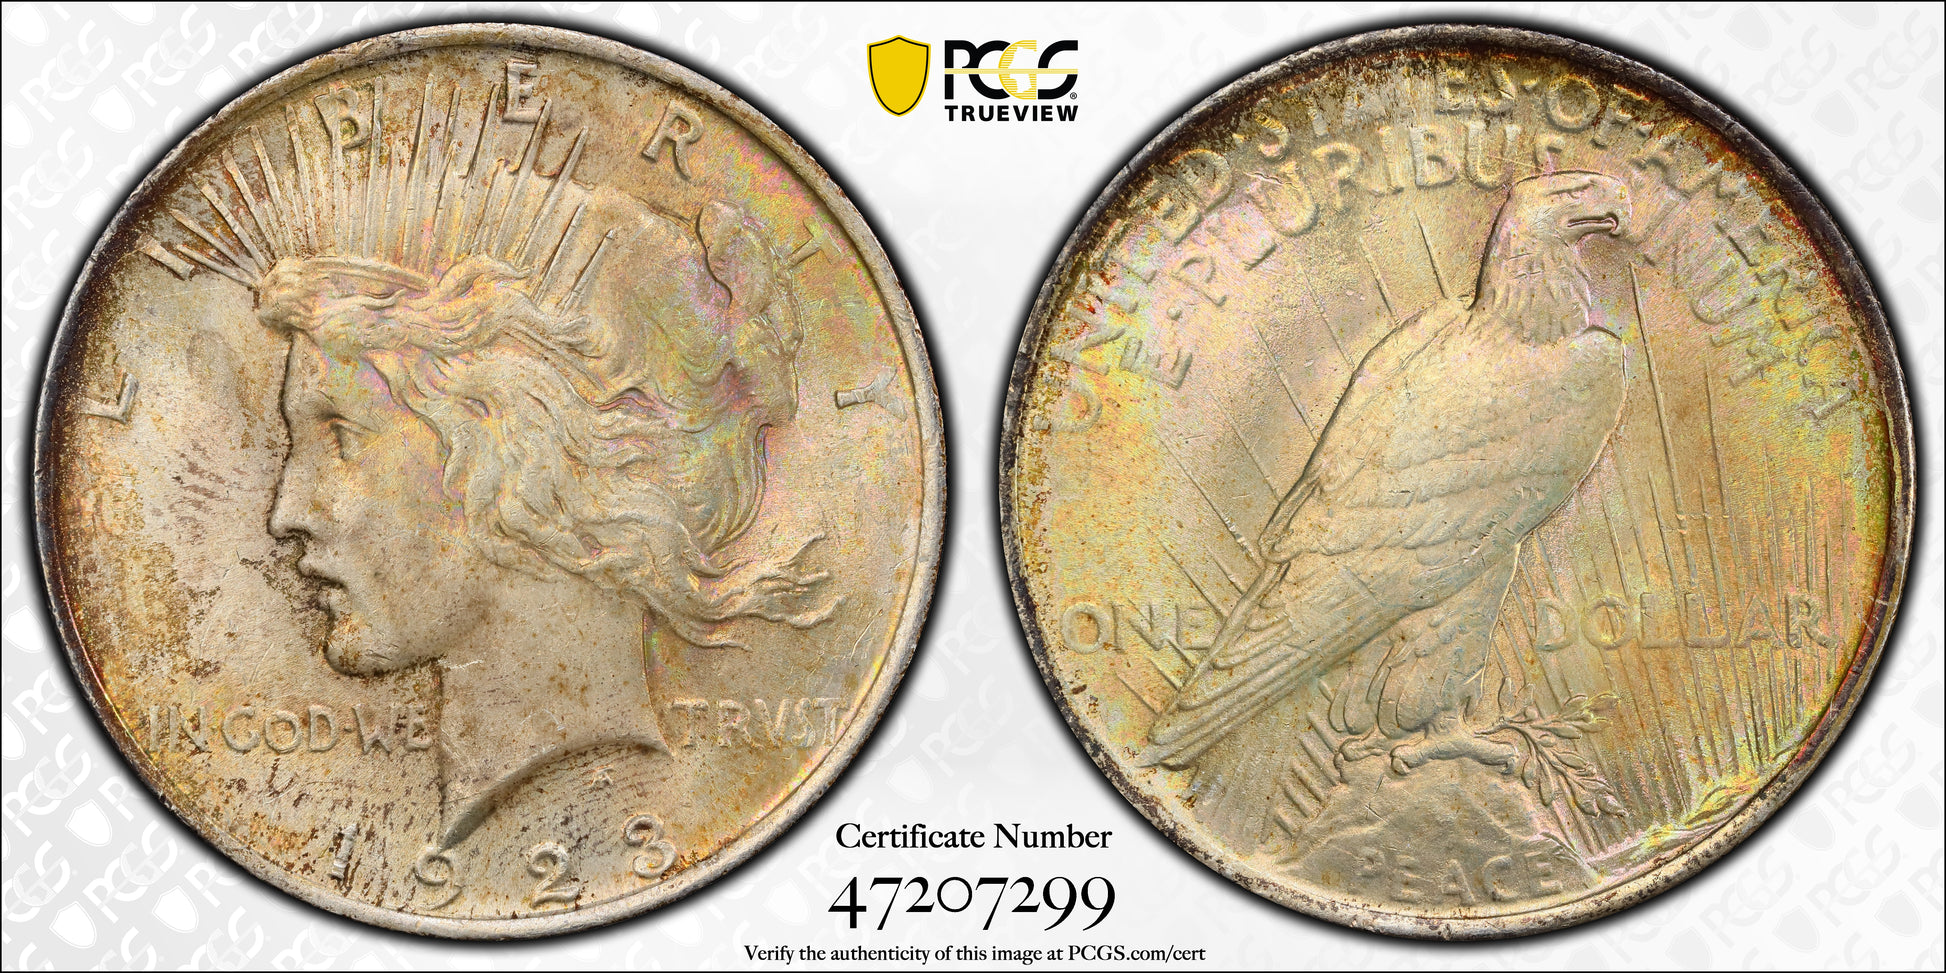 1923 Peace Dollar $1 PCGS MS63 - NICE COLOR! Trueview